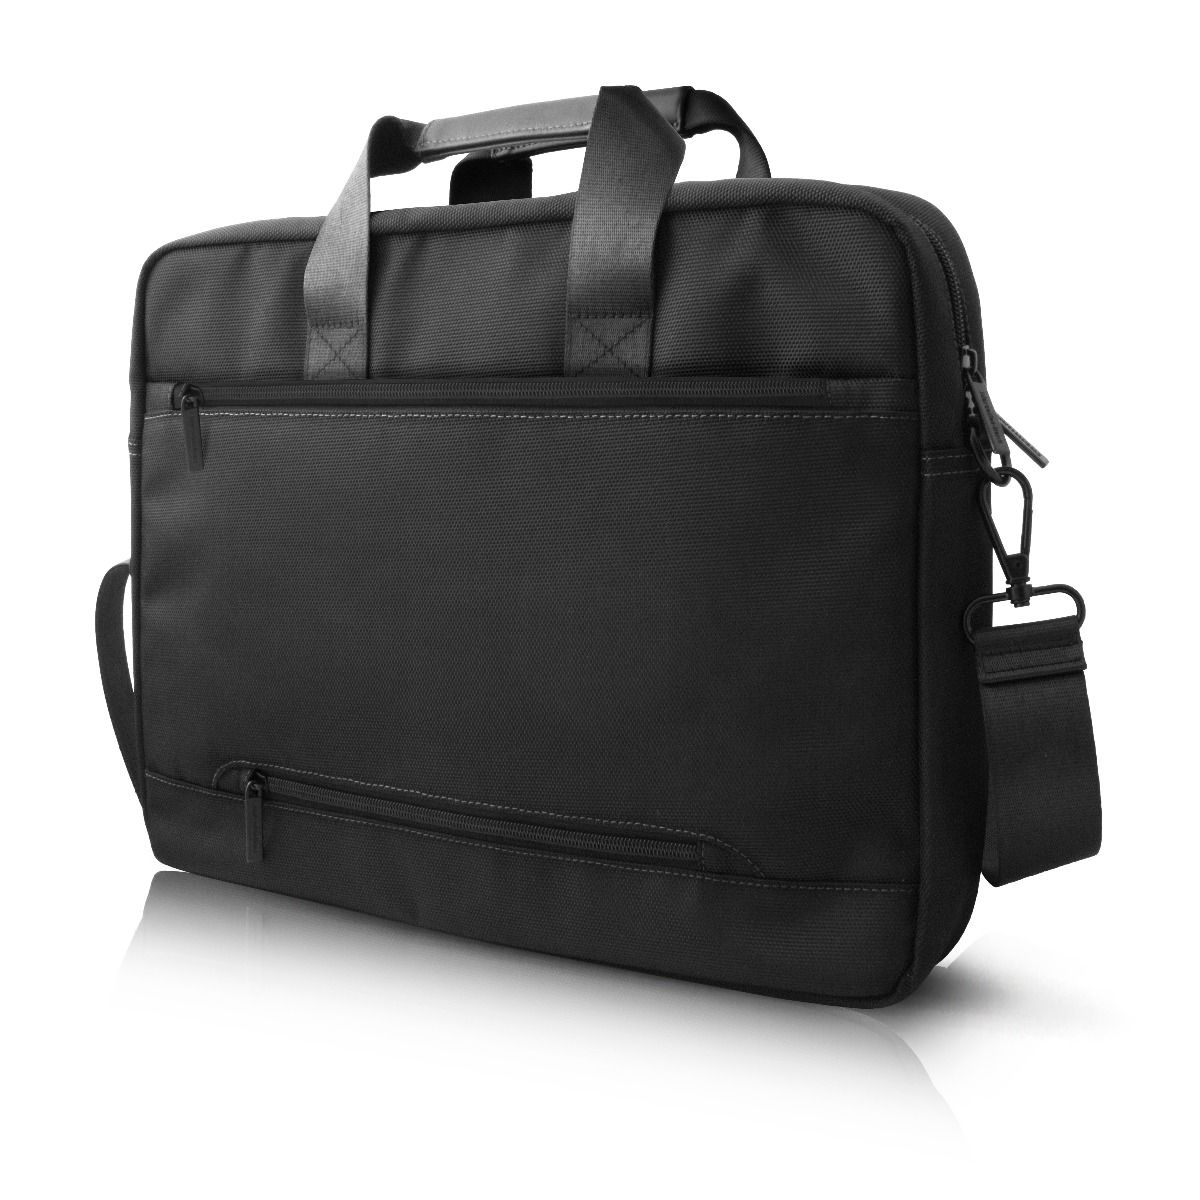 Mercedes Benz Pattern III 15” Messenger Laptop / Document Bag - Black